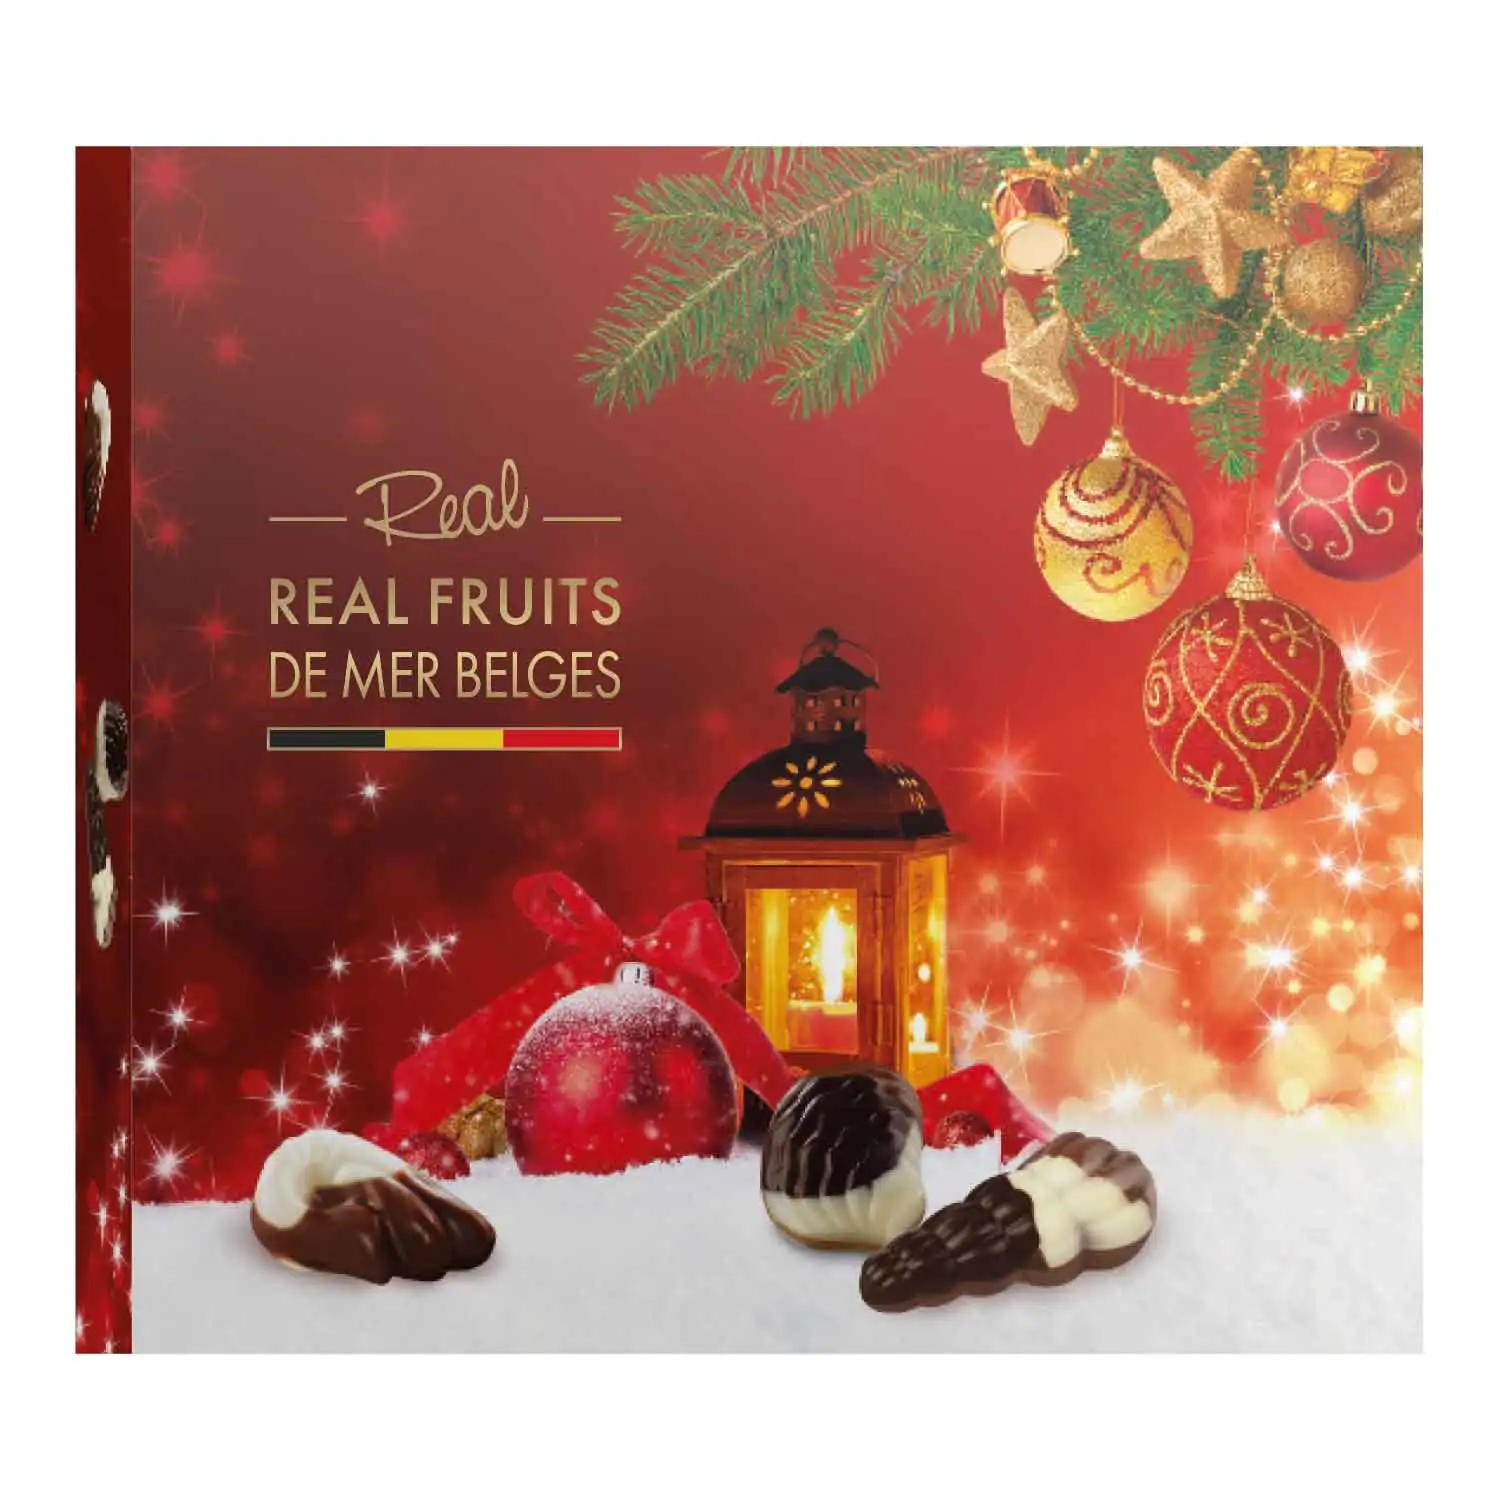 Real fruits de mer belges Noël 190g - Buy at Real Tobacco